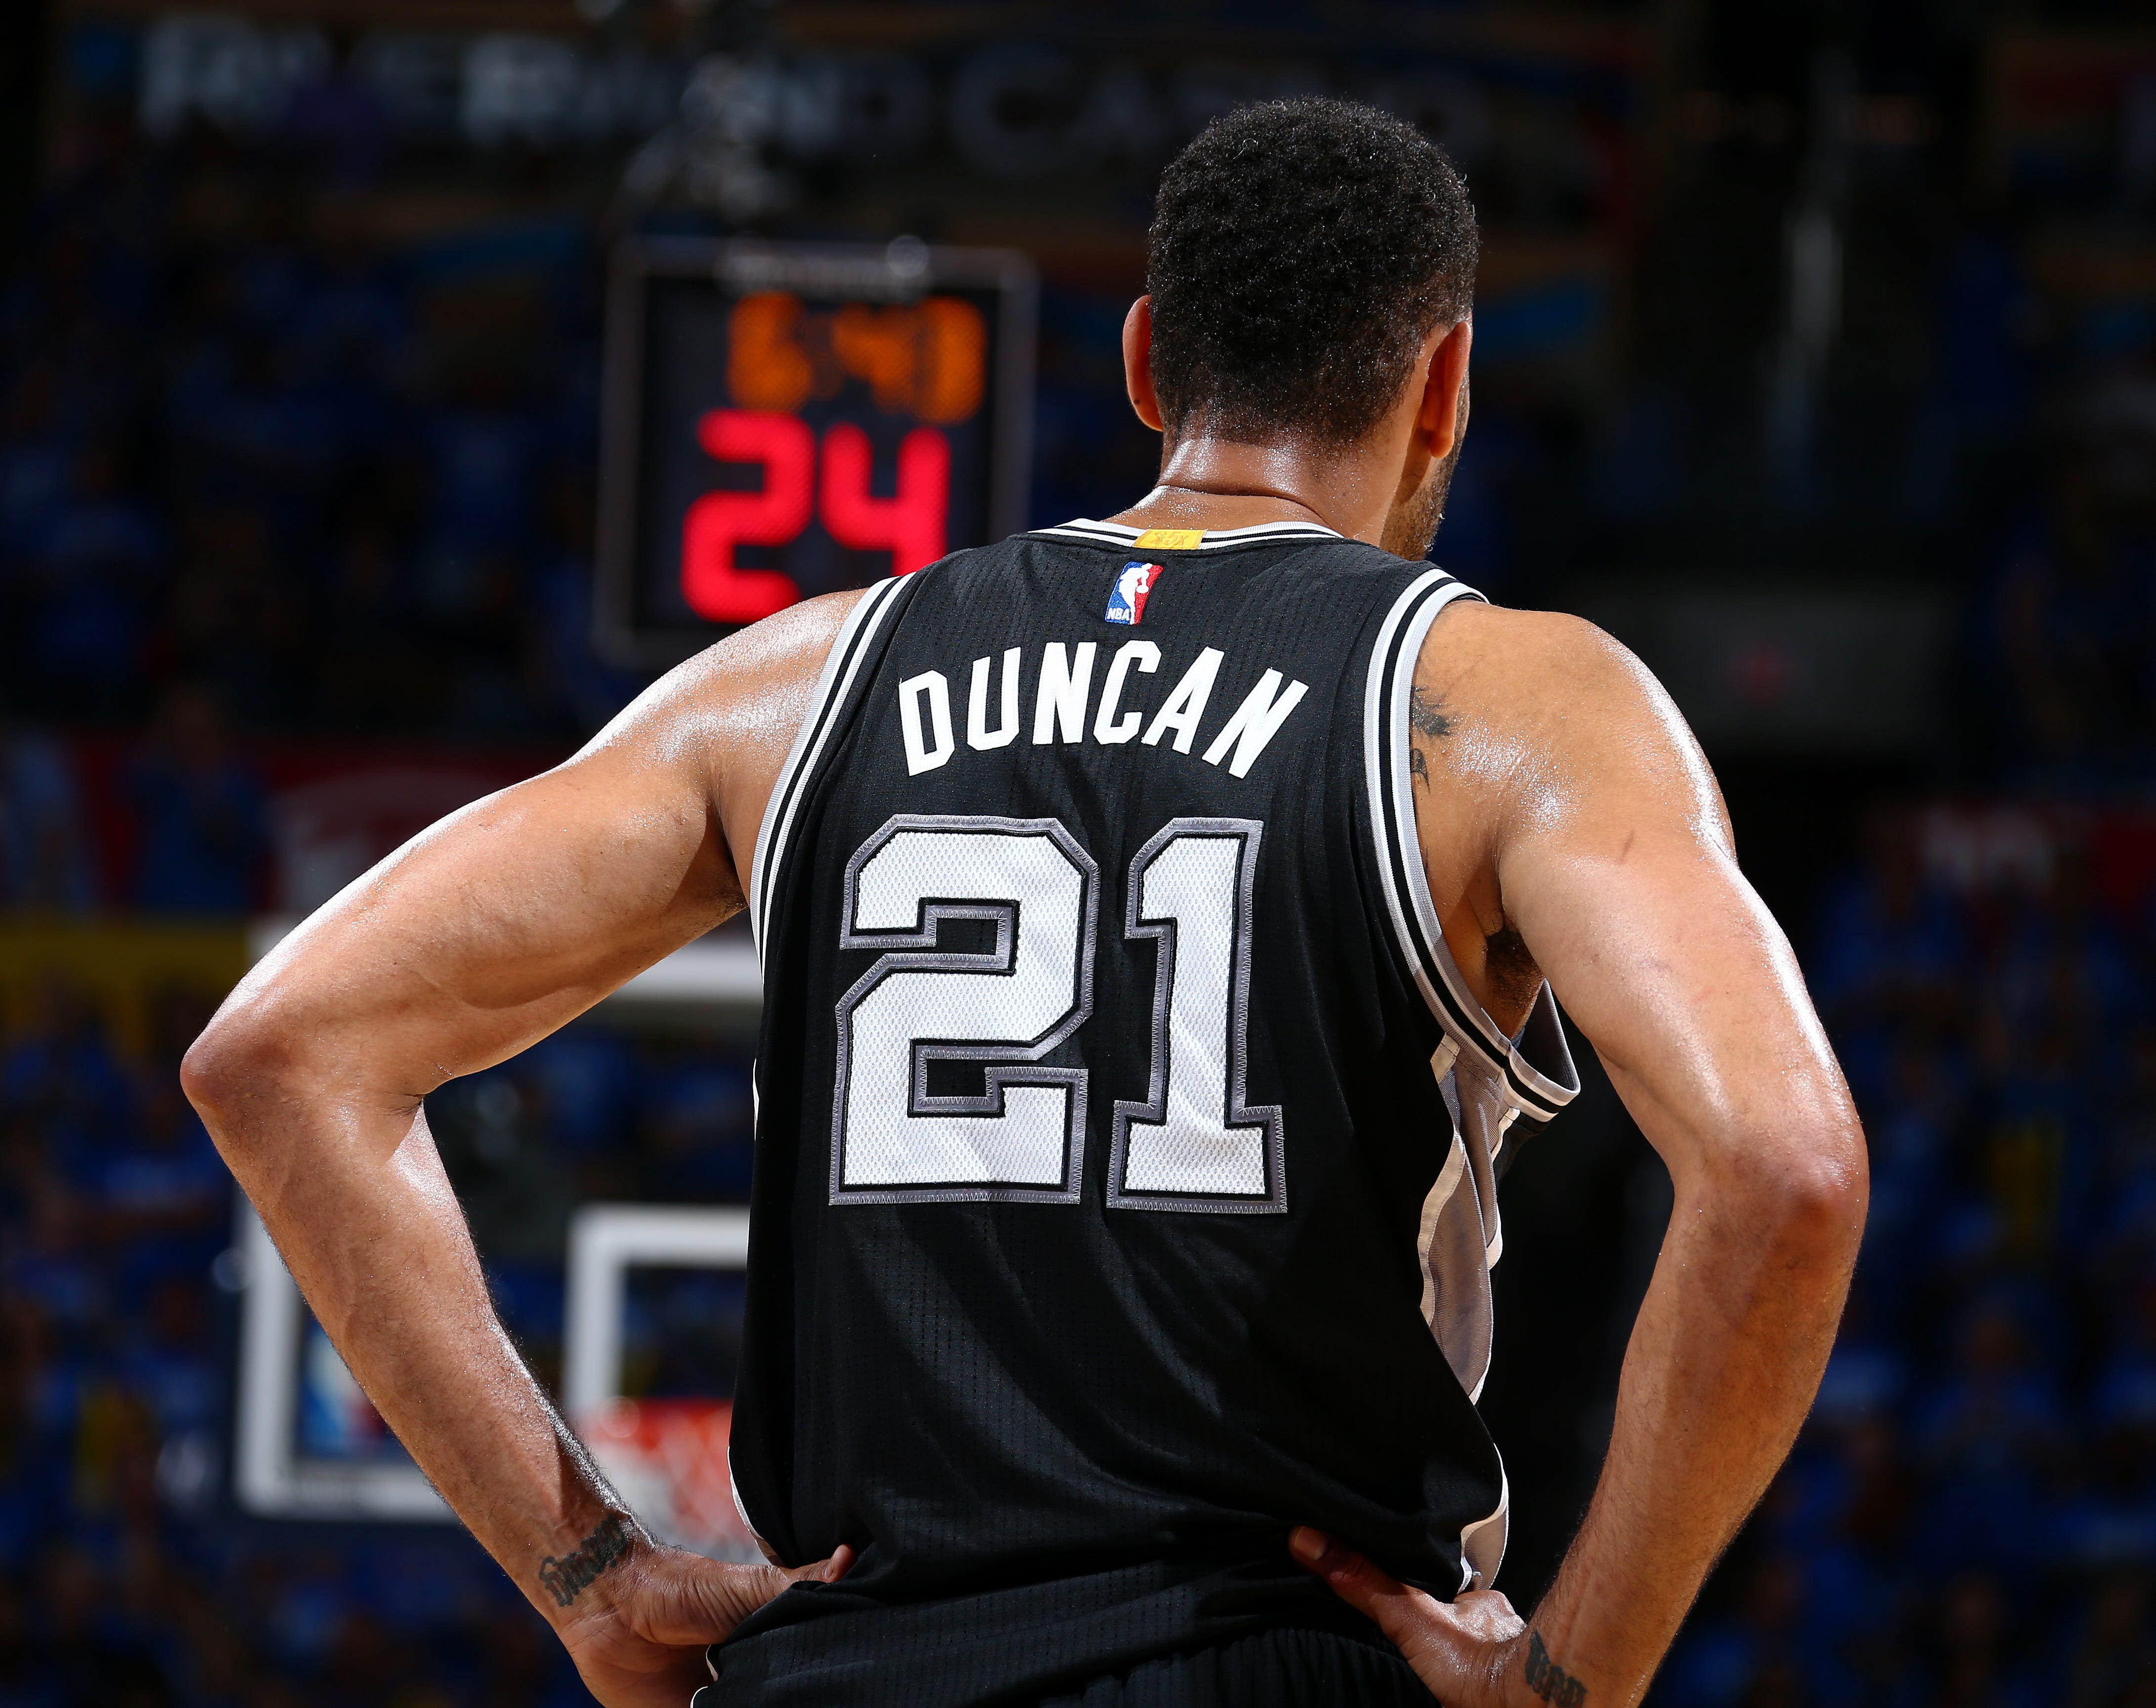 21 TIM DUNCAN San Antonio Spurs NBA PF/Center Grey Throwback Jersey